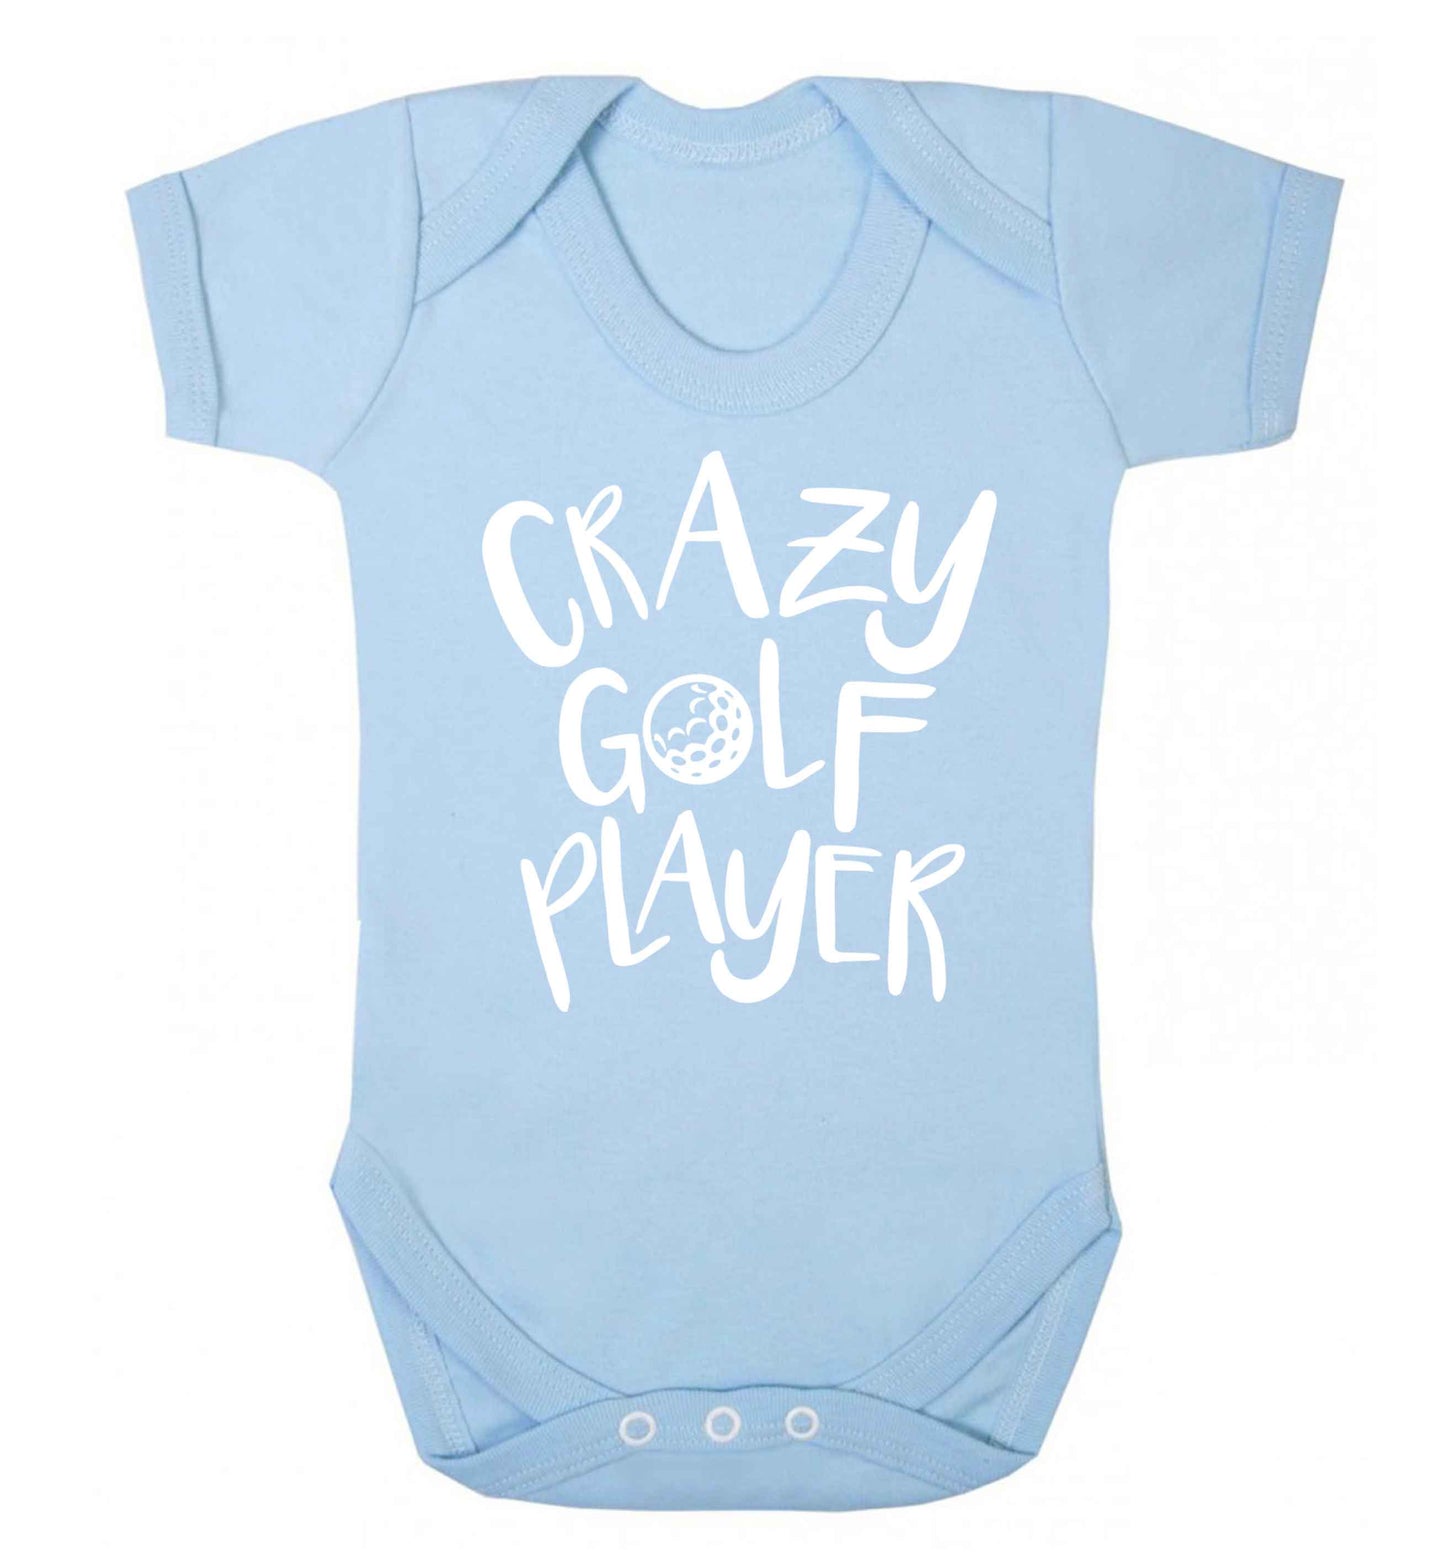 Crazy golf player Baby Vest pale blue 18-24 months